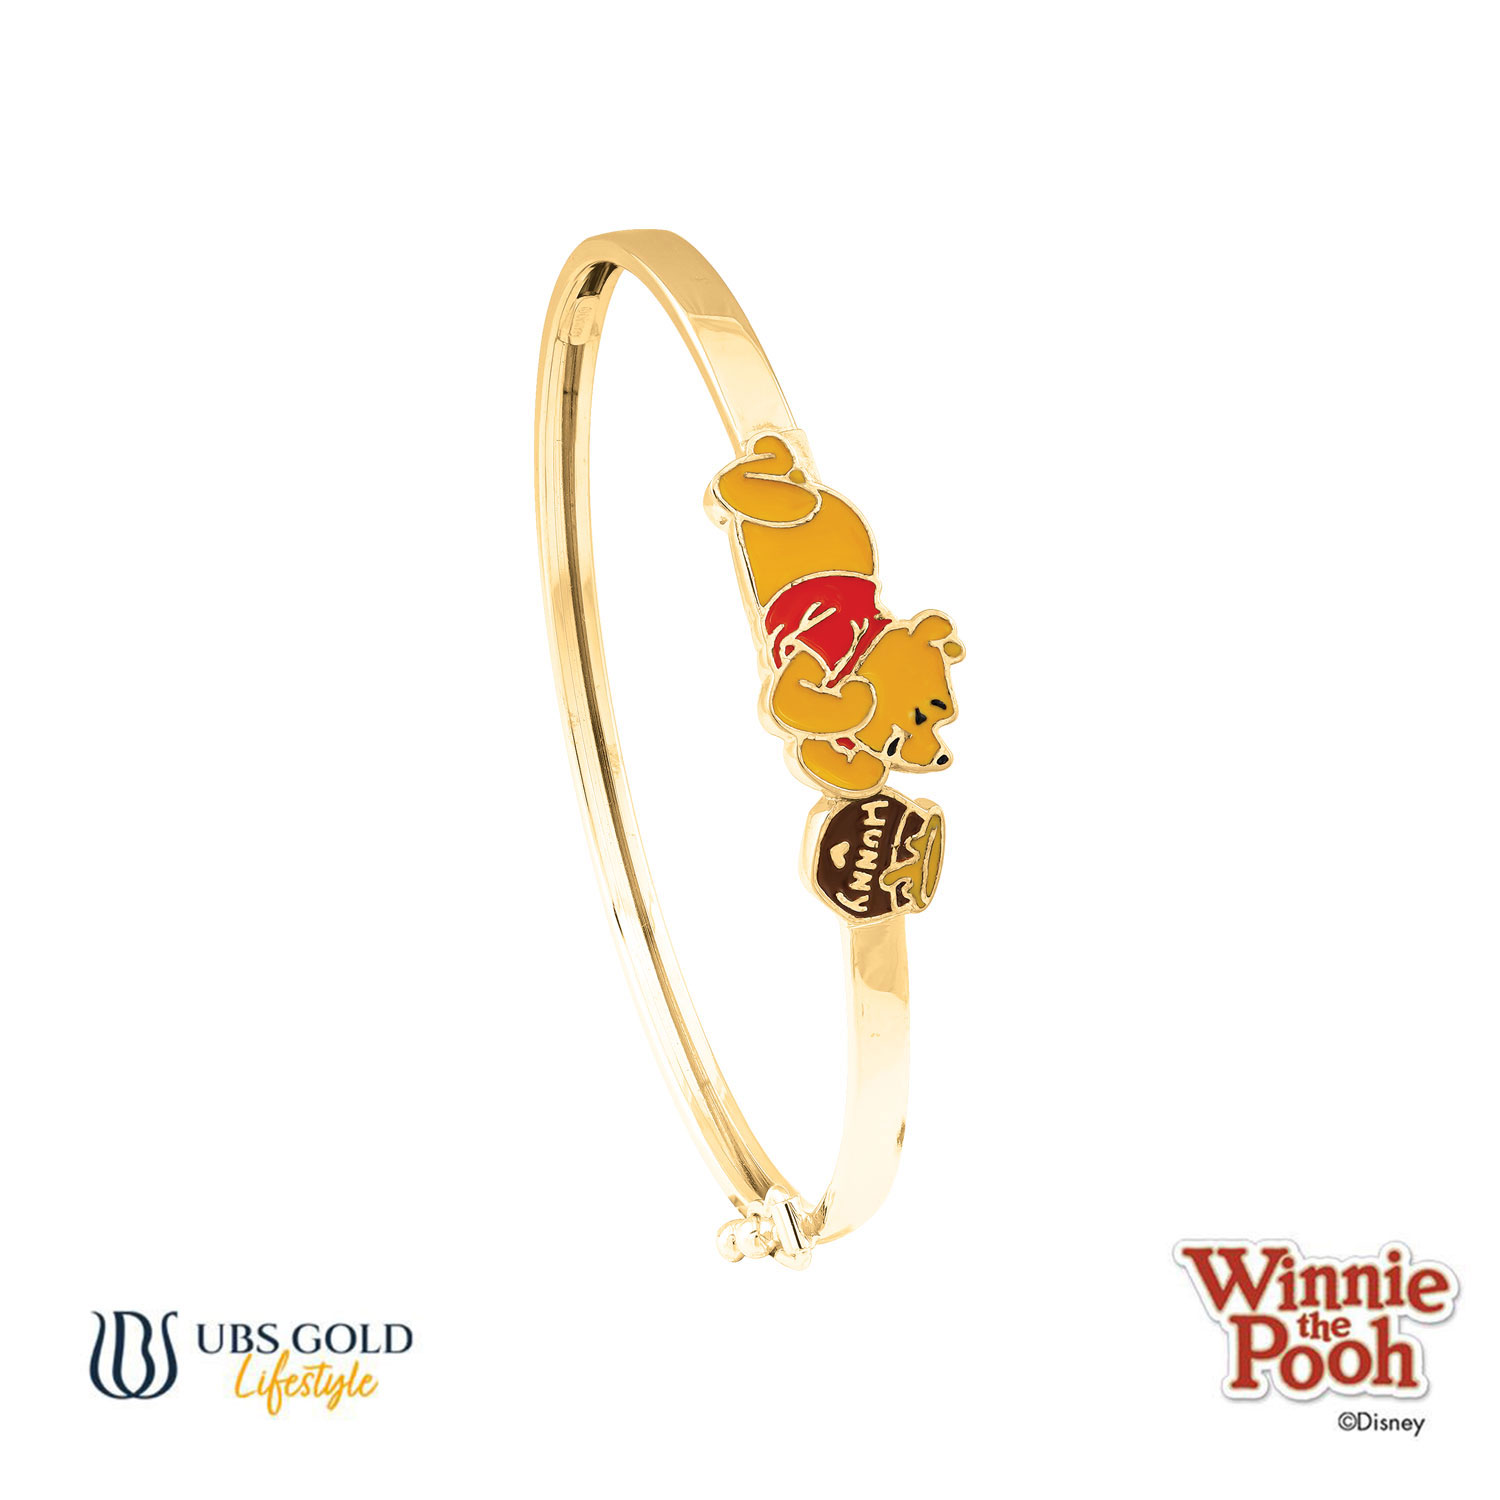 UBS Gelang Emas Bayi Disney Winnie The Pooh - Vgy0103 - 17K